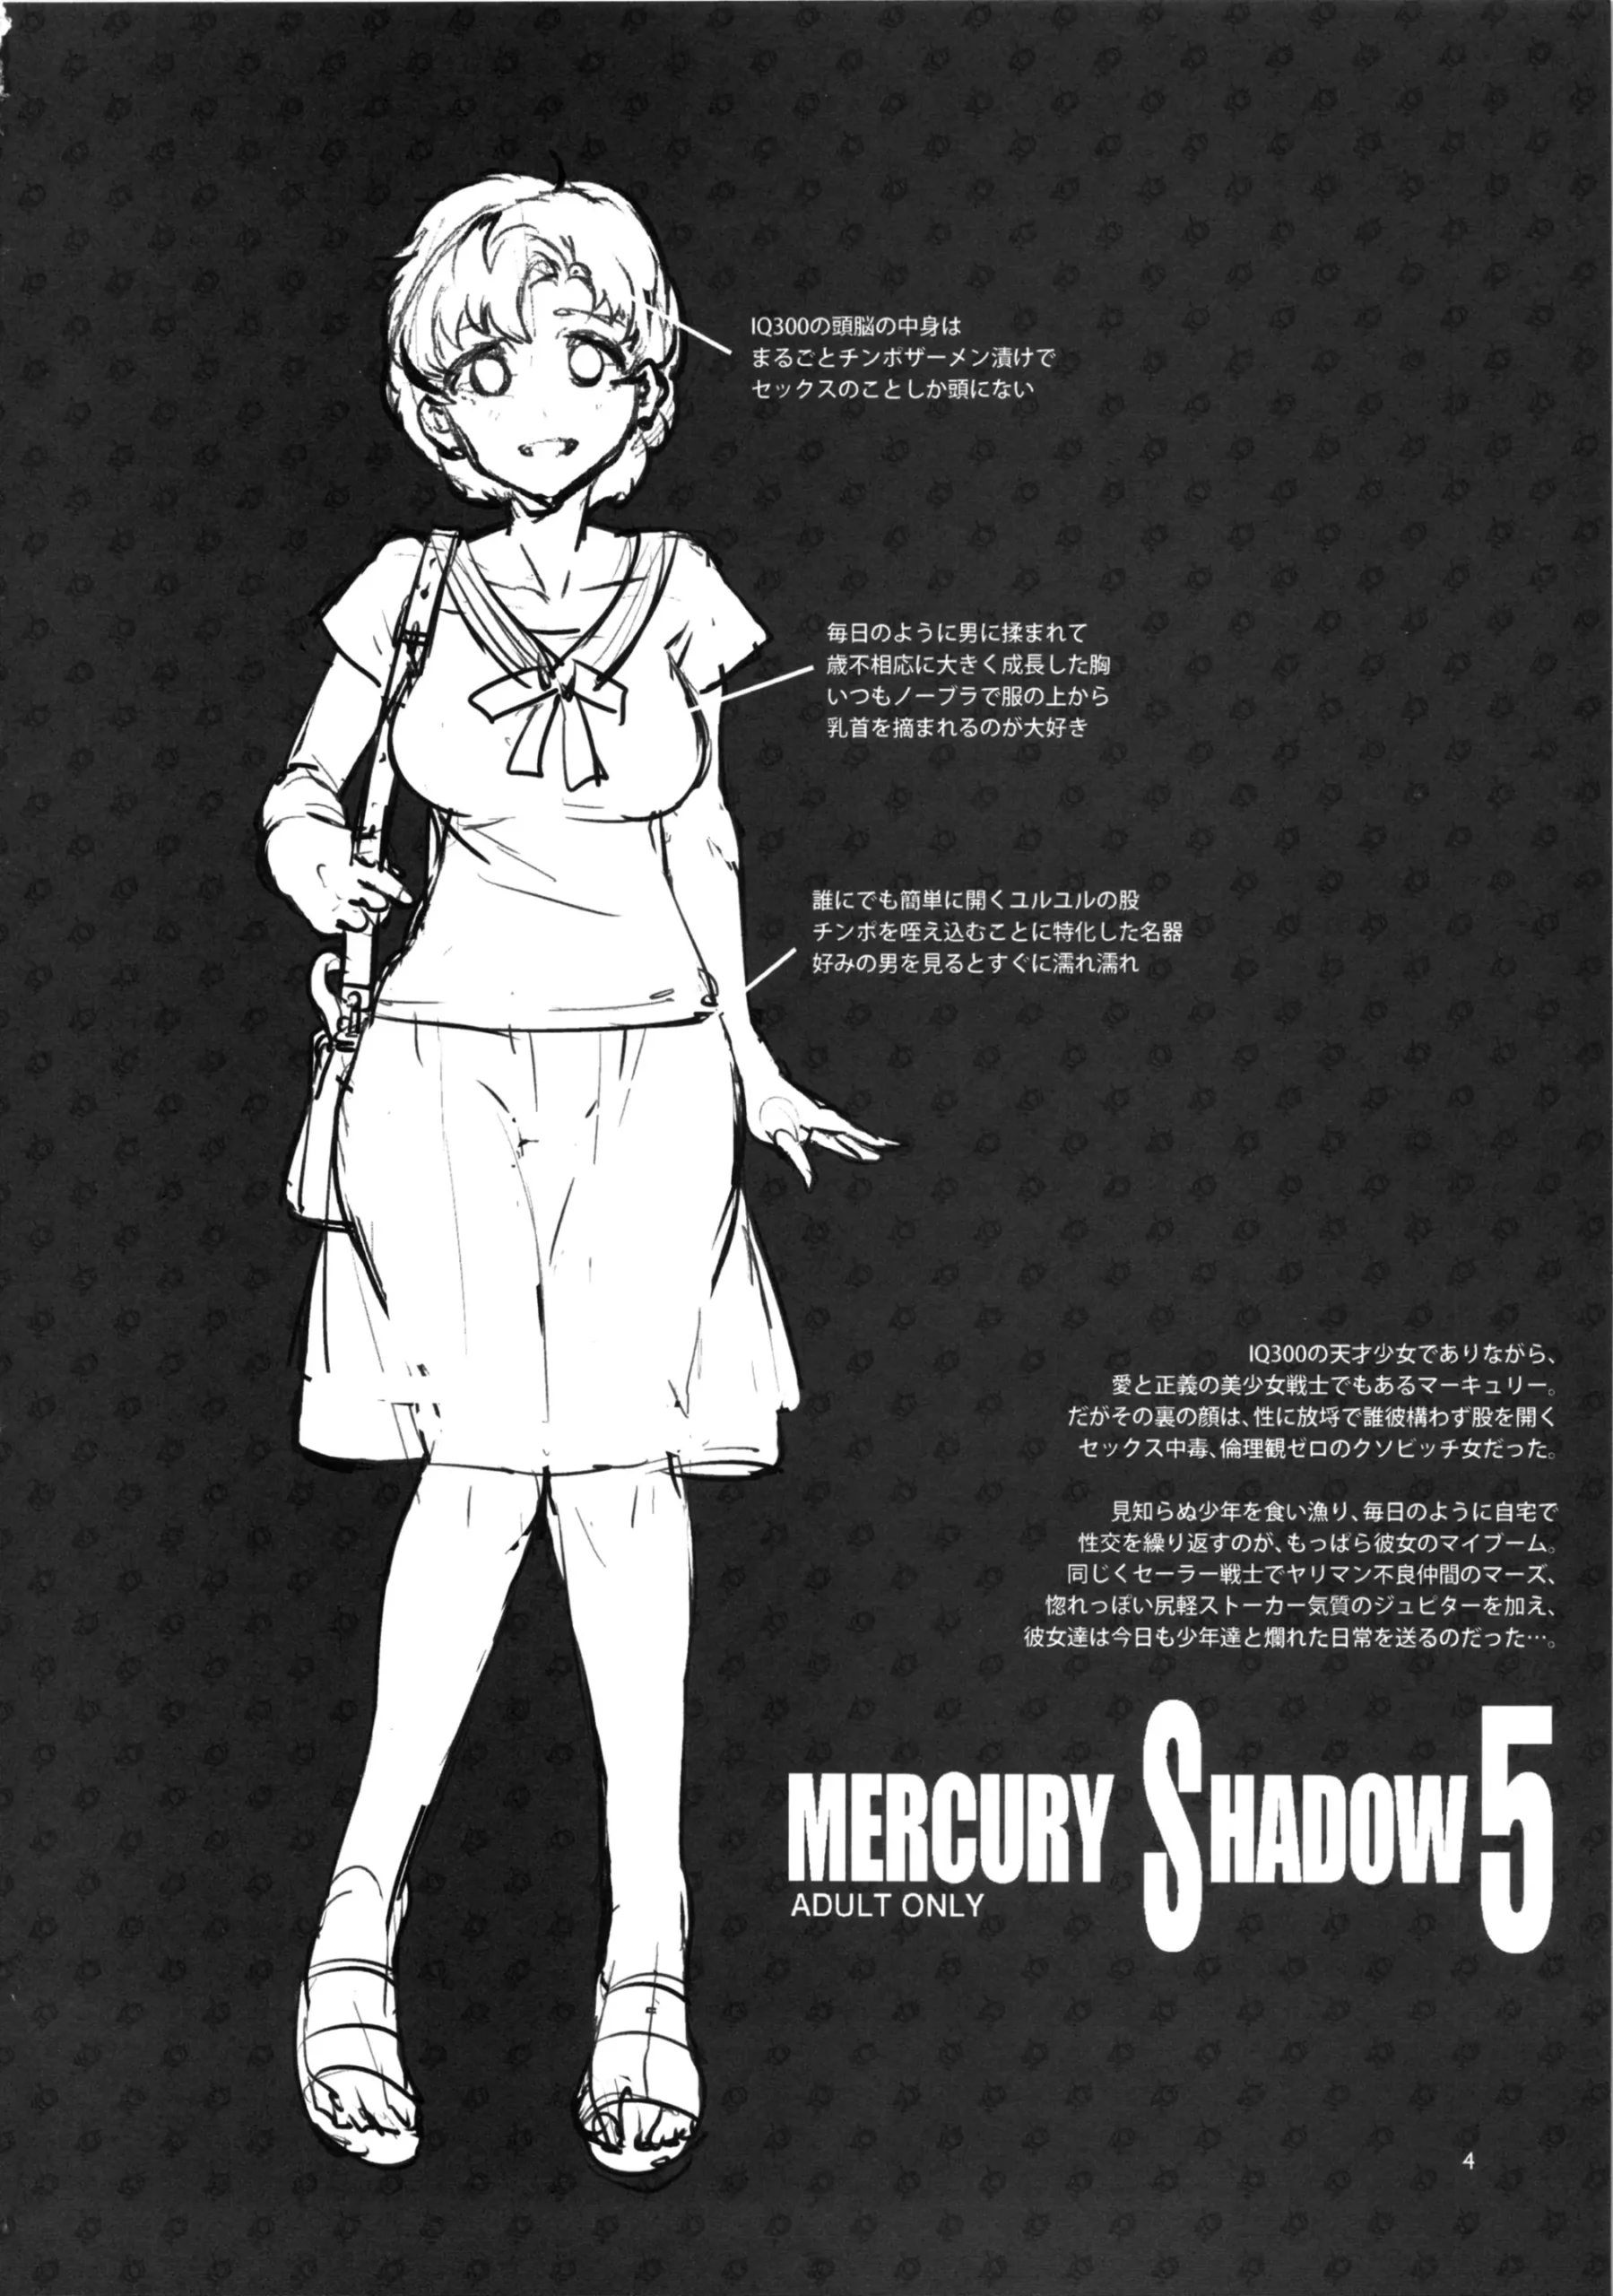 MERCURY SHADOW 5